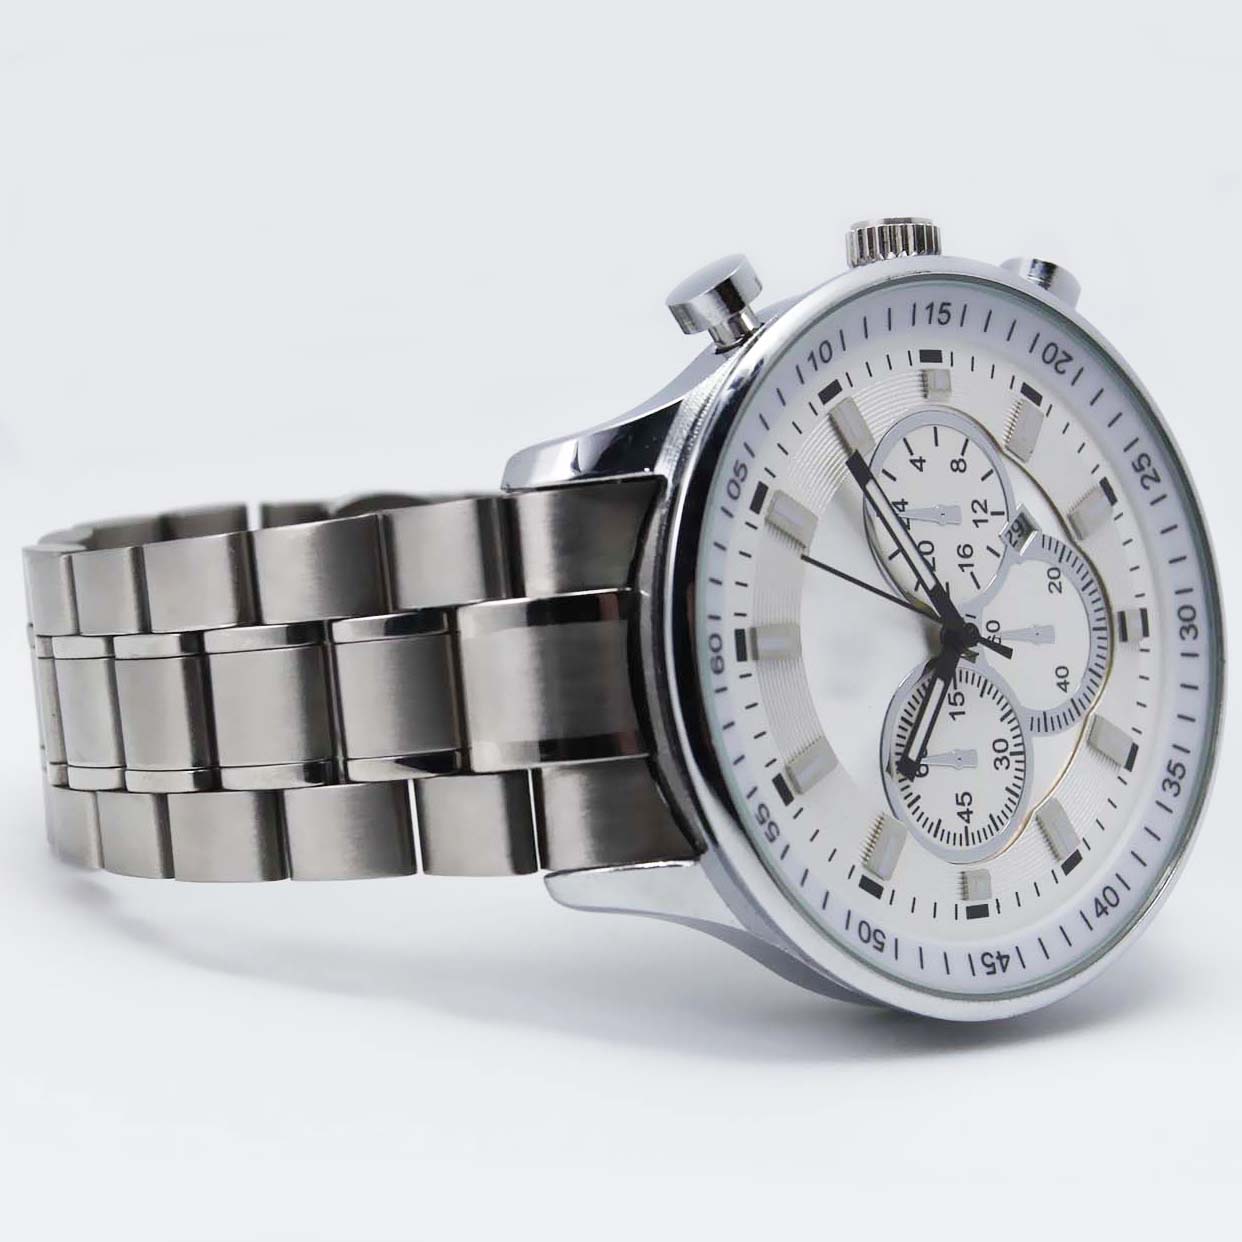 #02094Men's wristwatch quartz analog alloy strap watch